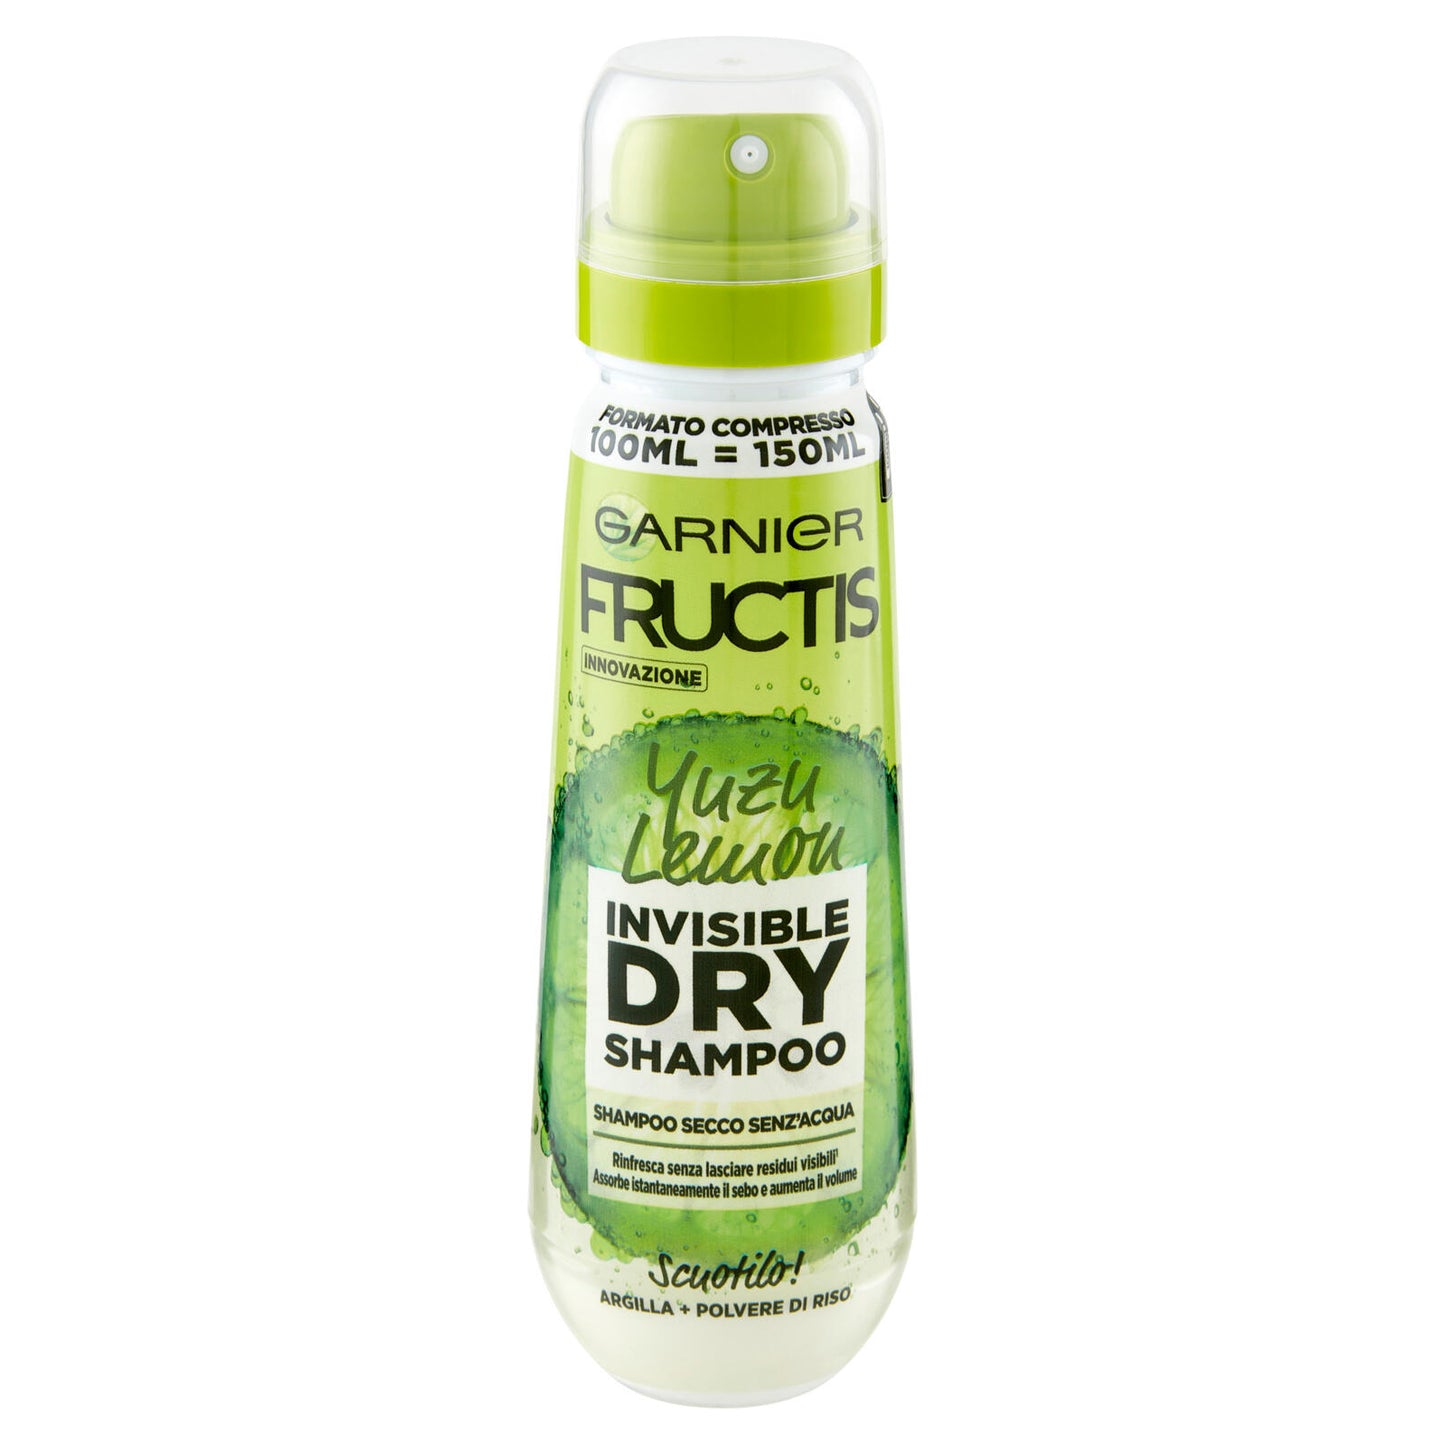 Garnier Fructis Invisible Dry Shampoo fragranza Yuzu Lemon, Shampoo Secco senz'acqua, 100 ml